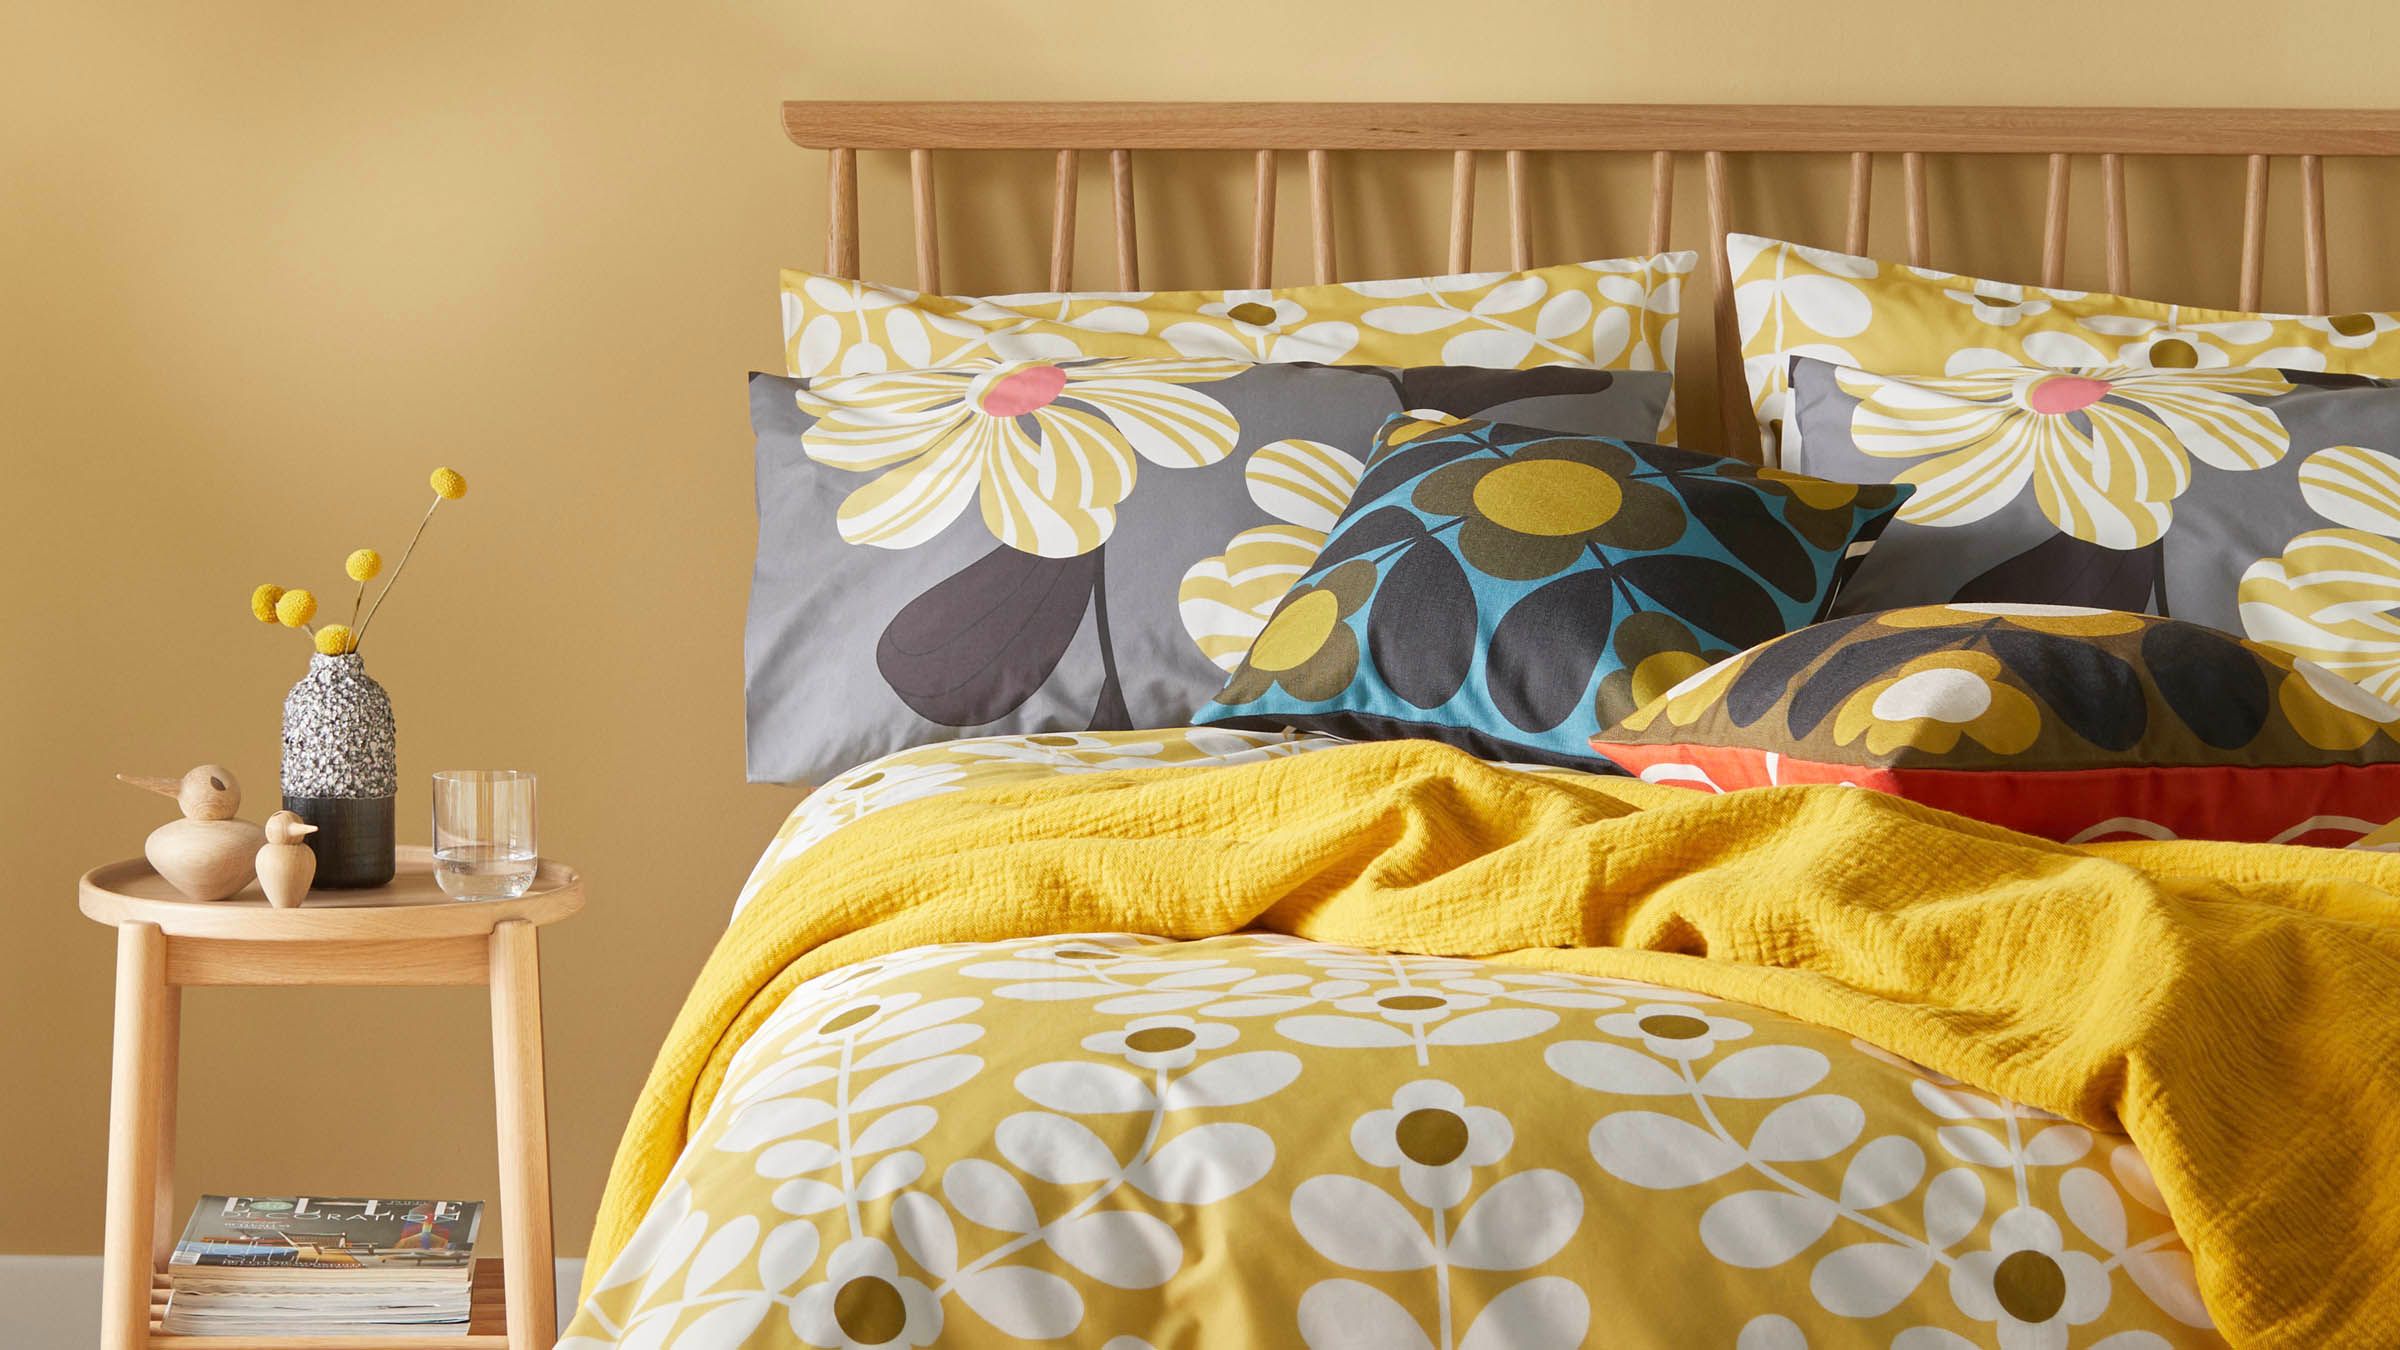 Bedding Bed Sets And Linen John, Blue And Gold King Size Duvet Cover Sets Uk